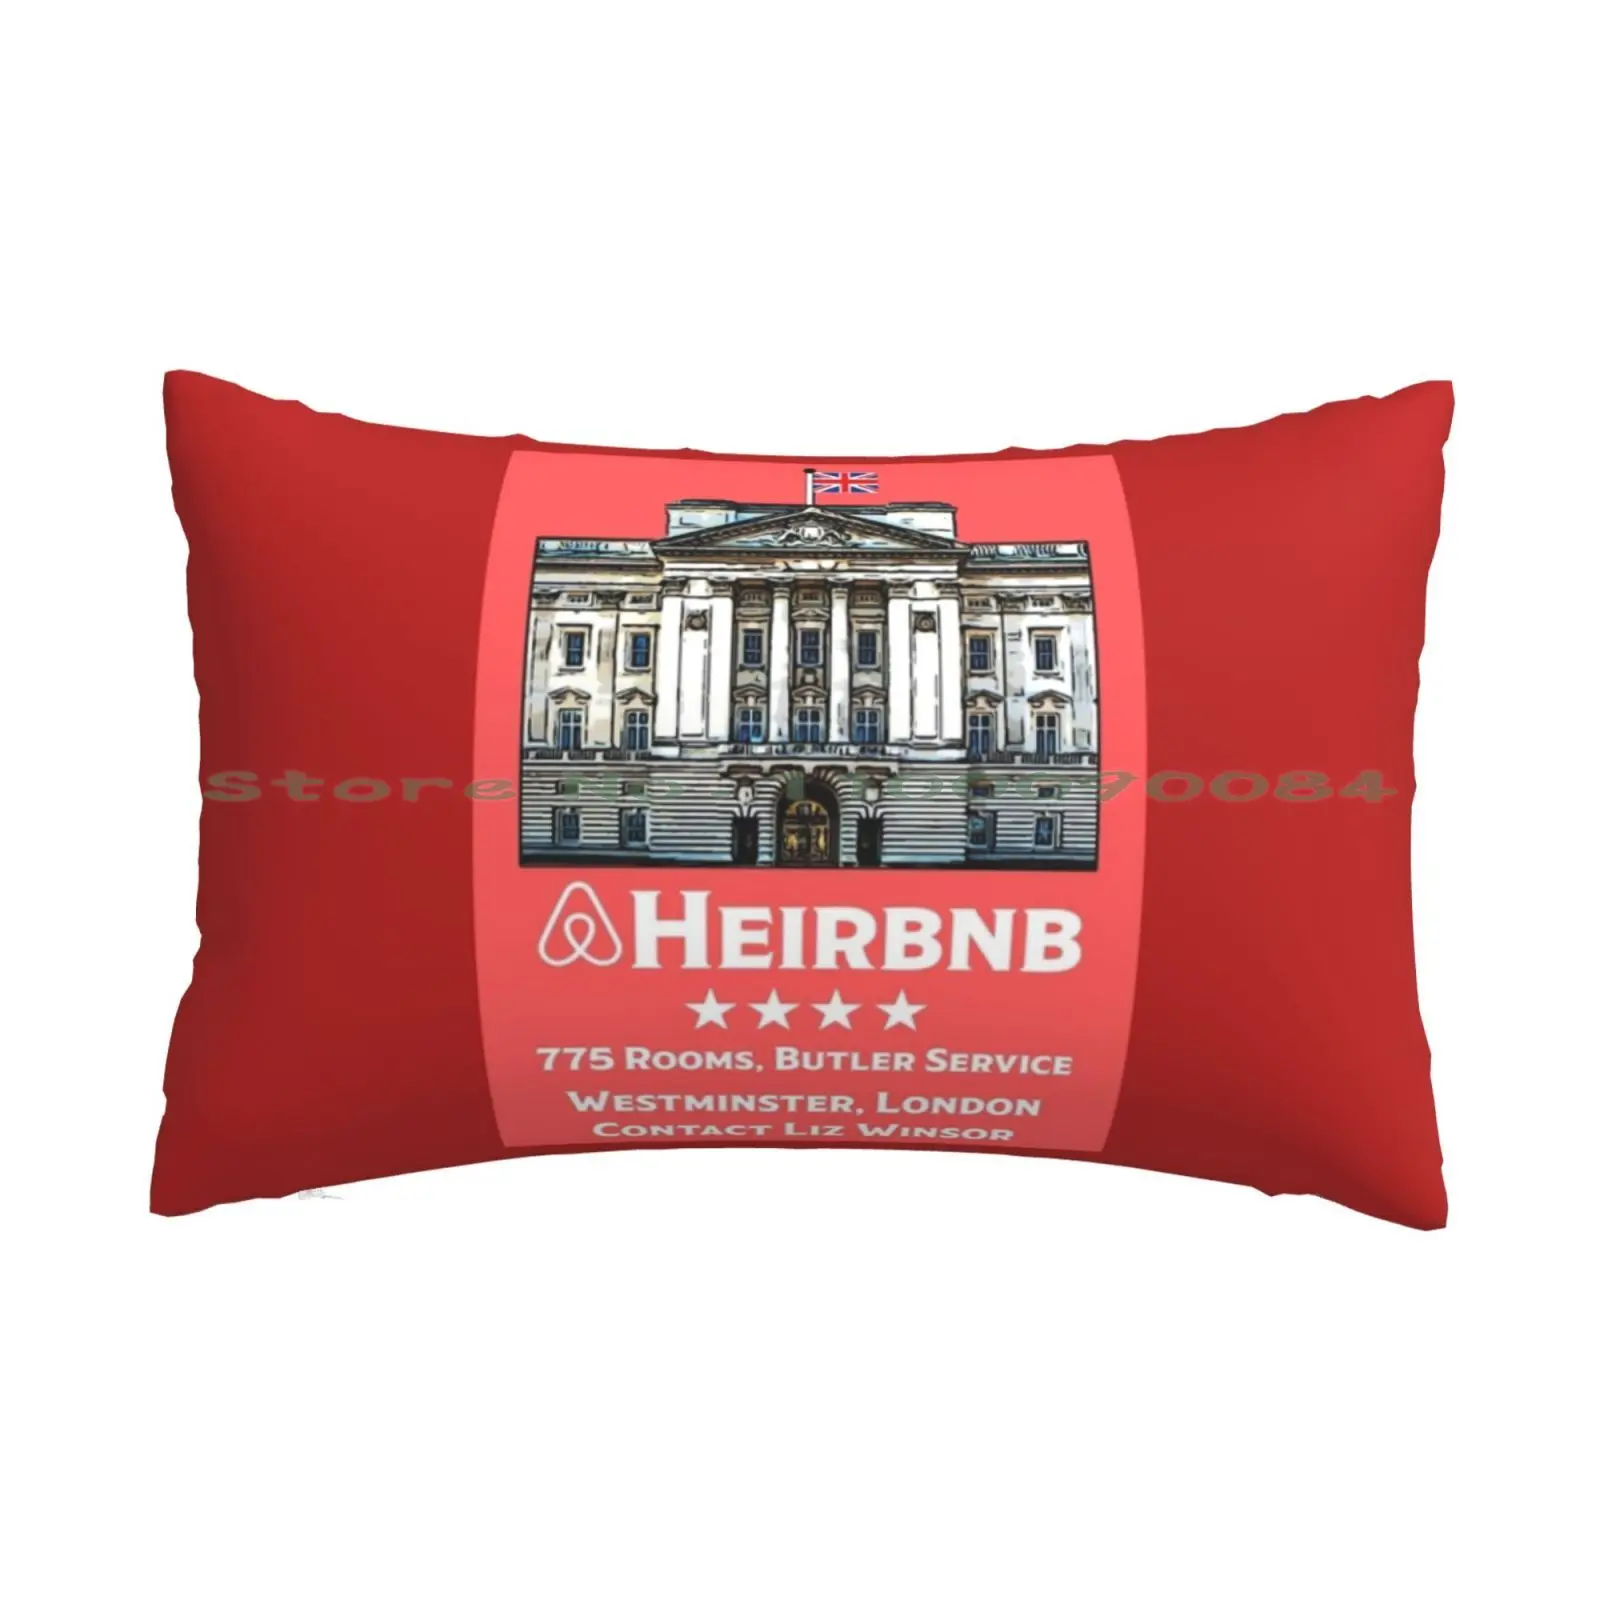 

Royal Family-Bp Rbnb-Rental-Parody-Comedy Gifts Pillow Case 20x30 50*75 Sofa Bedroom Buckingham Tours Buckingham Rental